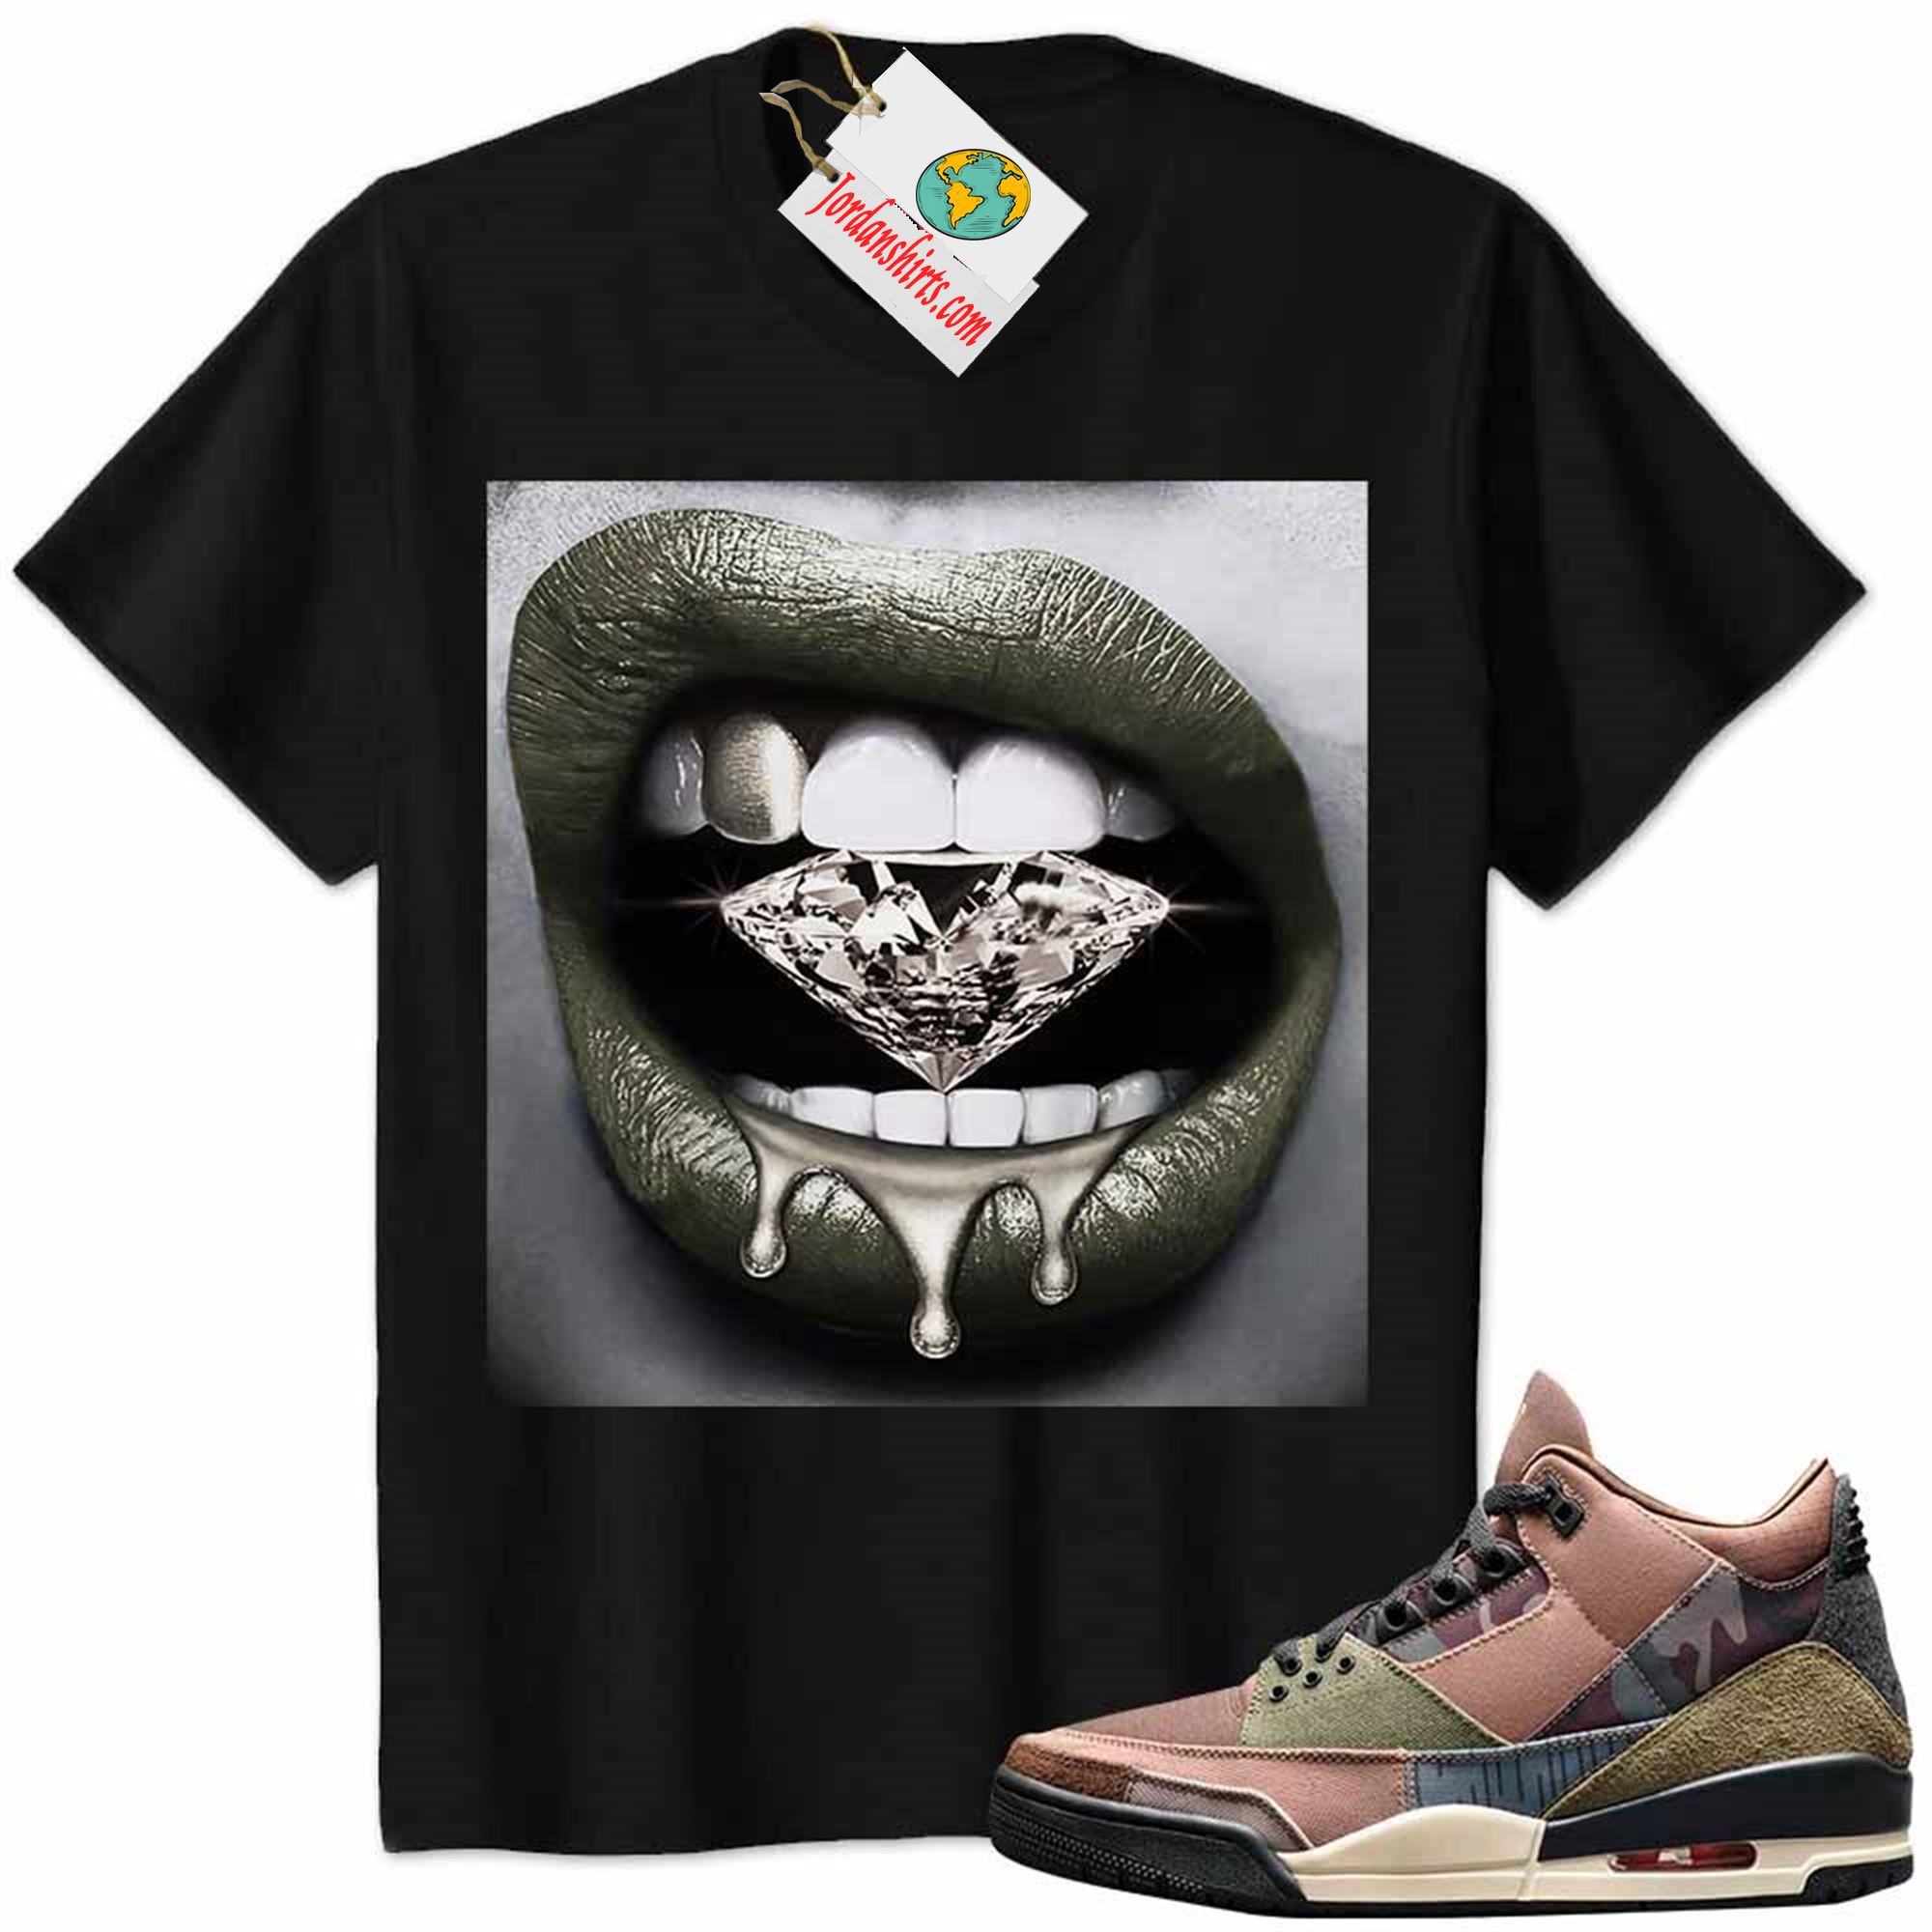 Jordan 3 Shirt, Jordan 3 Patchwork Shirt Sexy Lip Bite Diamond Dripping Black Full Size Up To 5xl